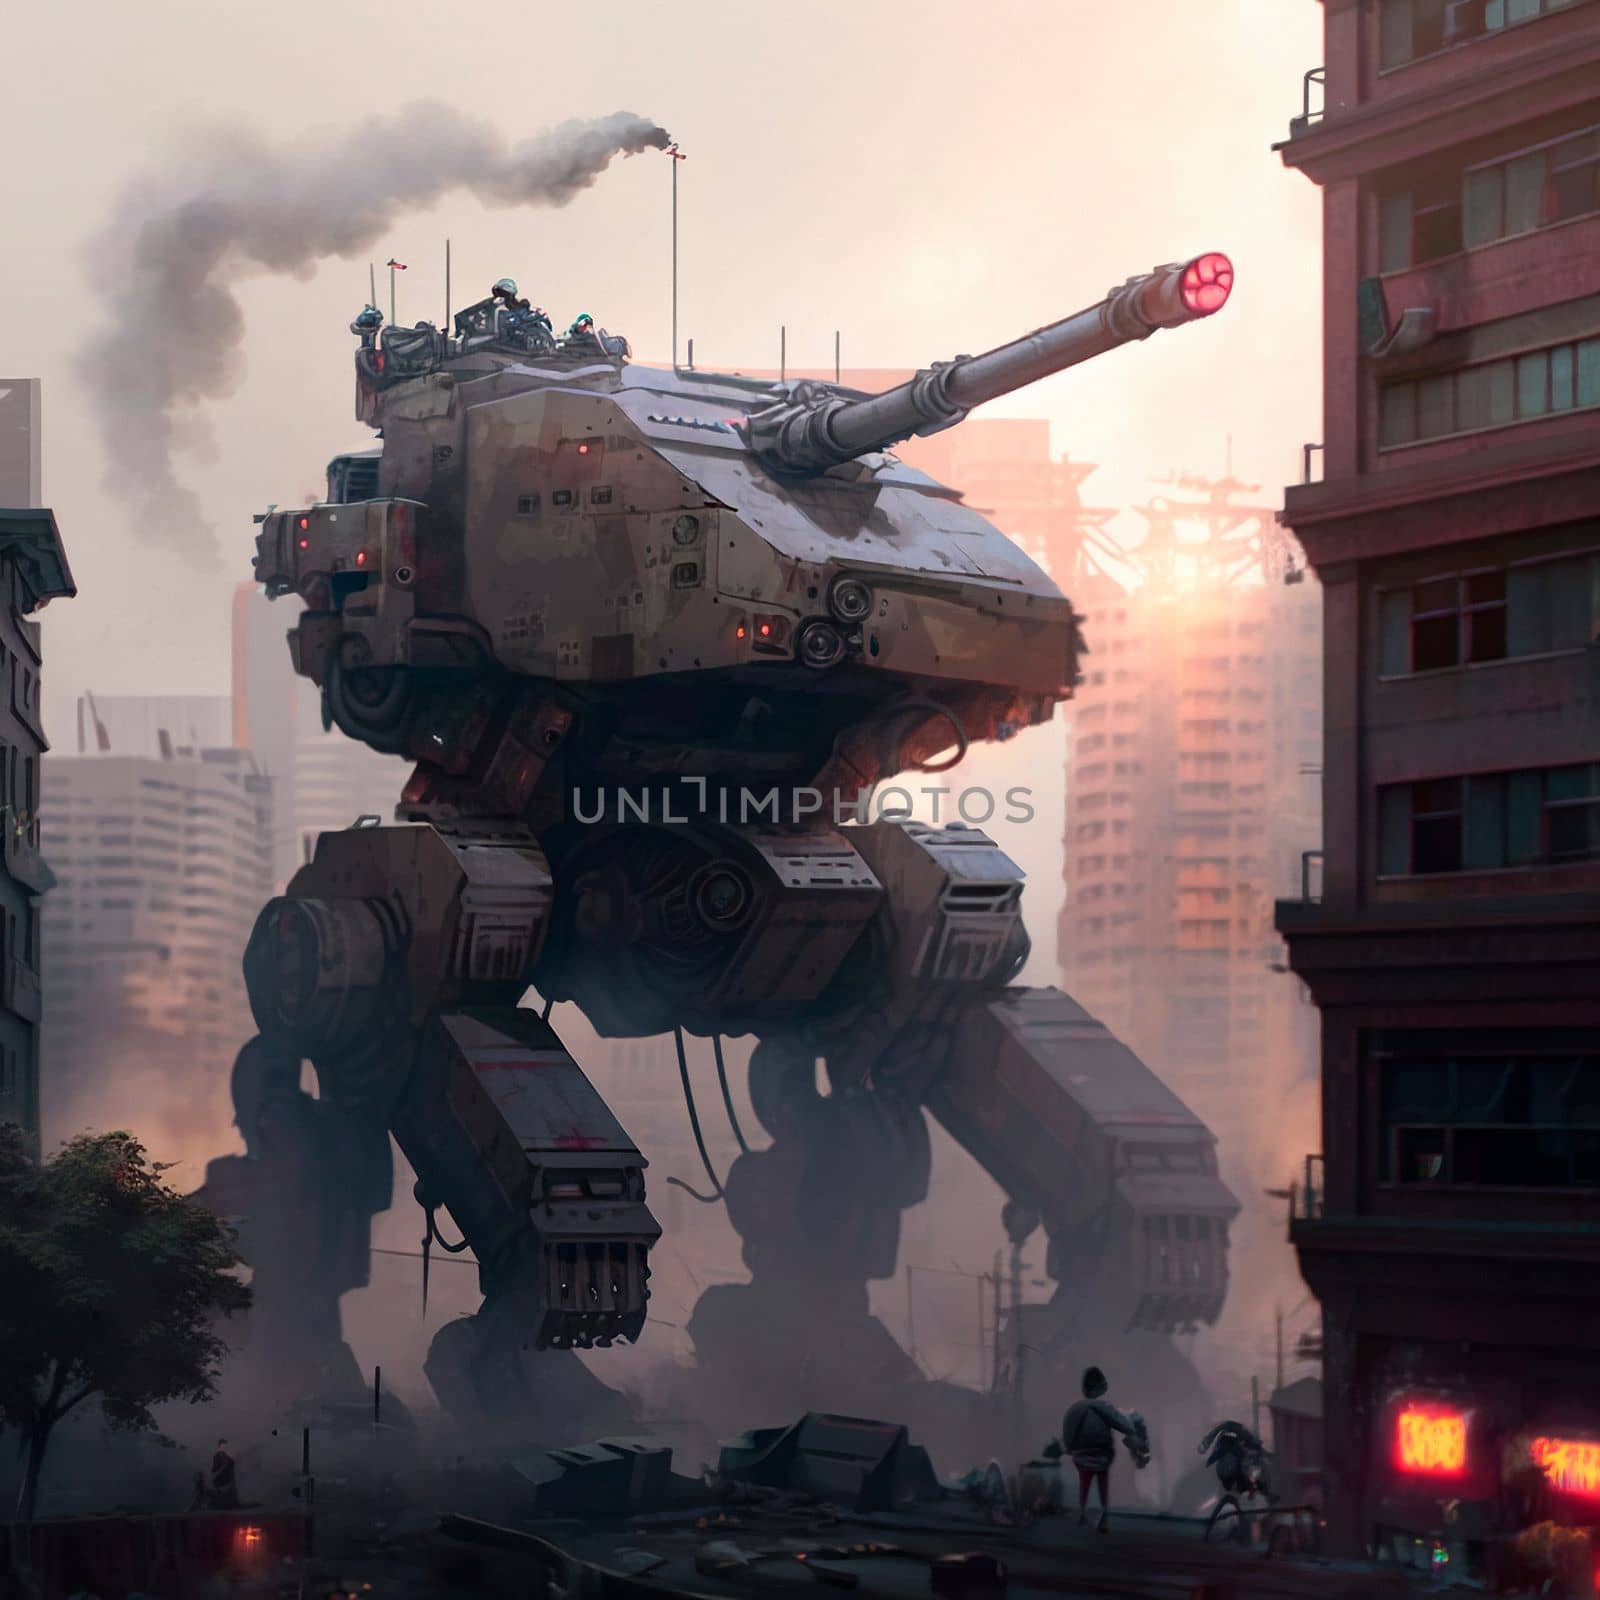 Huge robot tank by NeuroSky